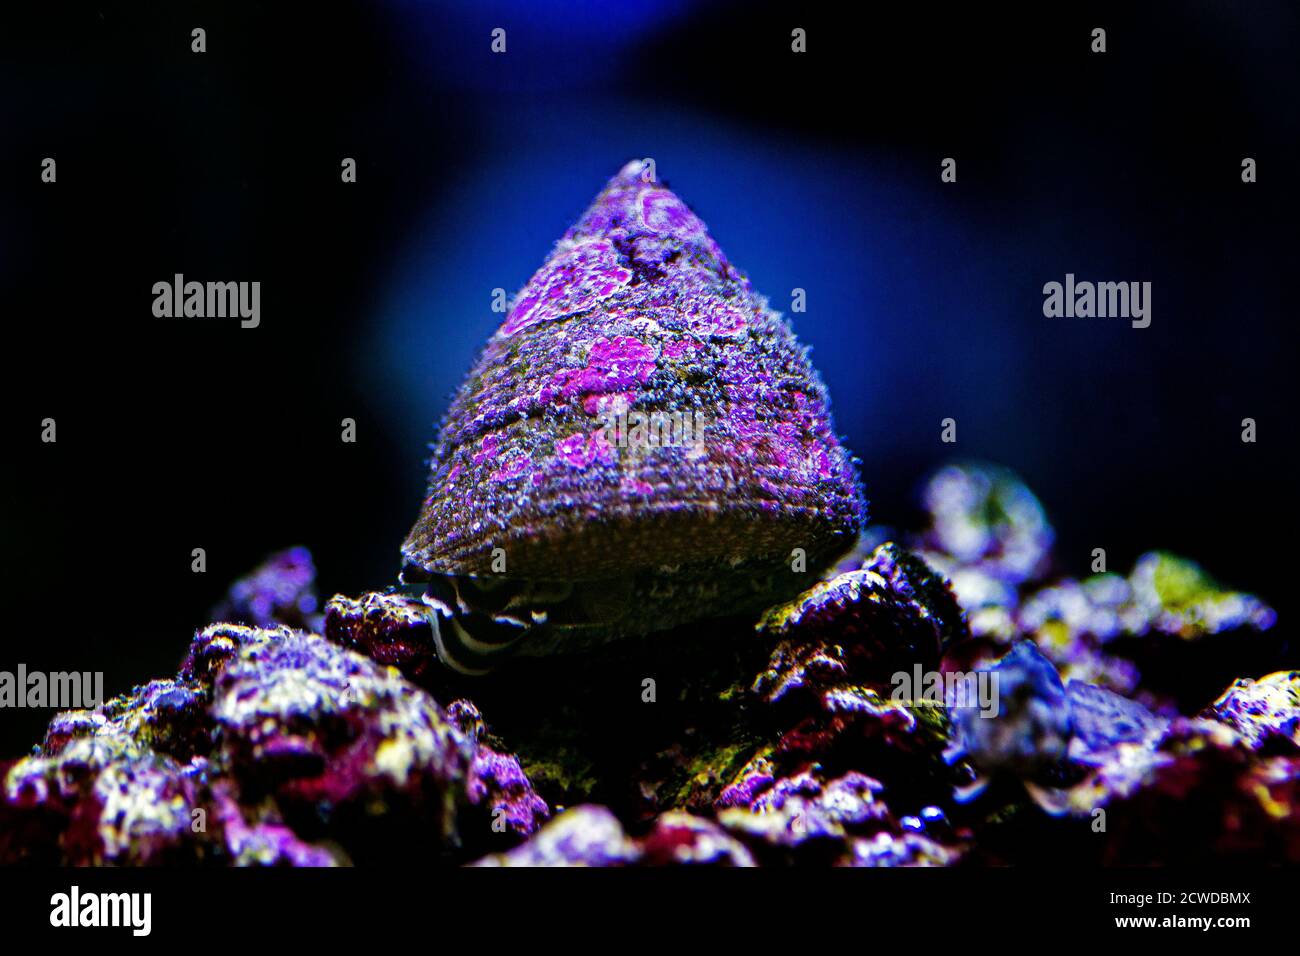 Saltwater Trochus snail in reef aquarium tank Stock Photo